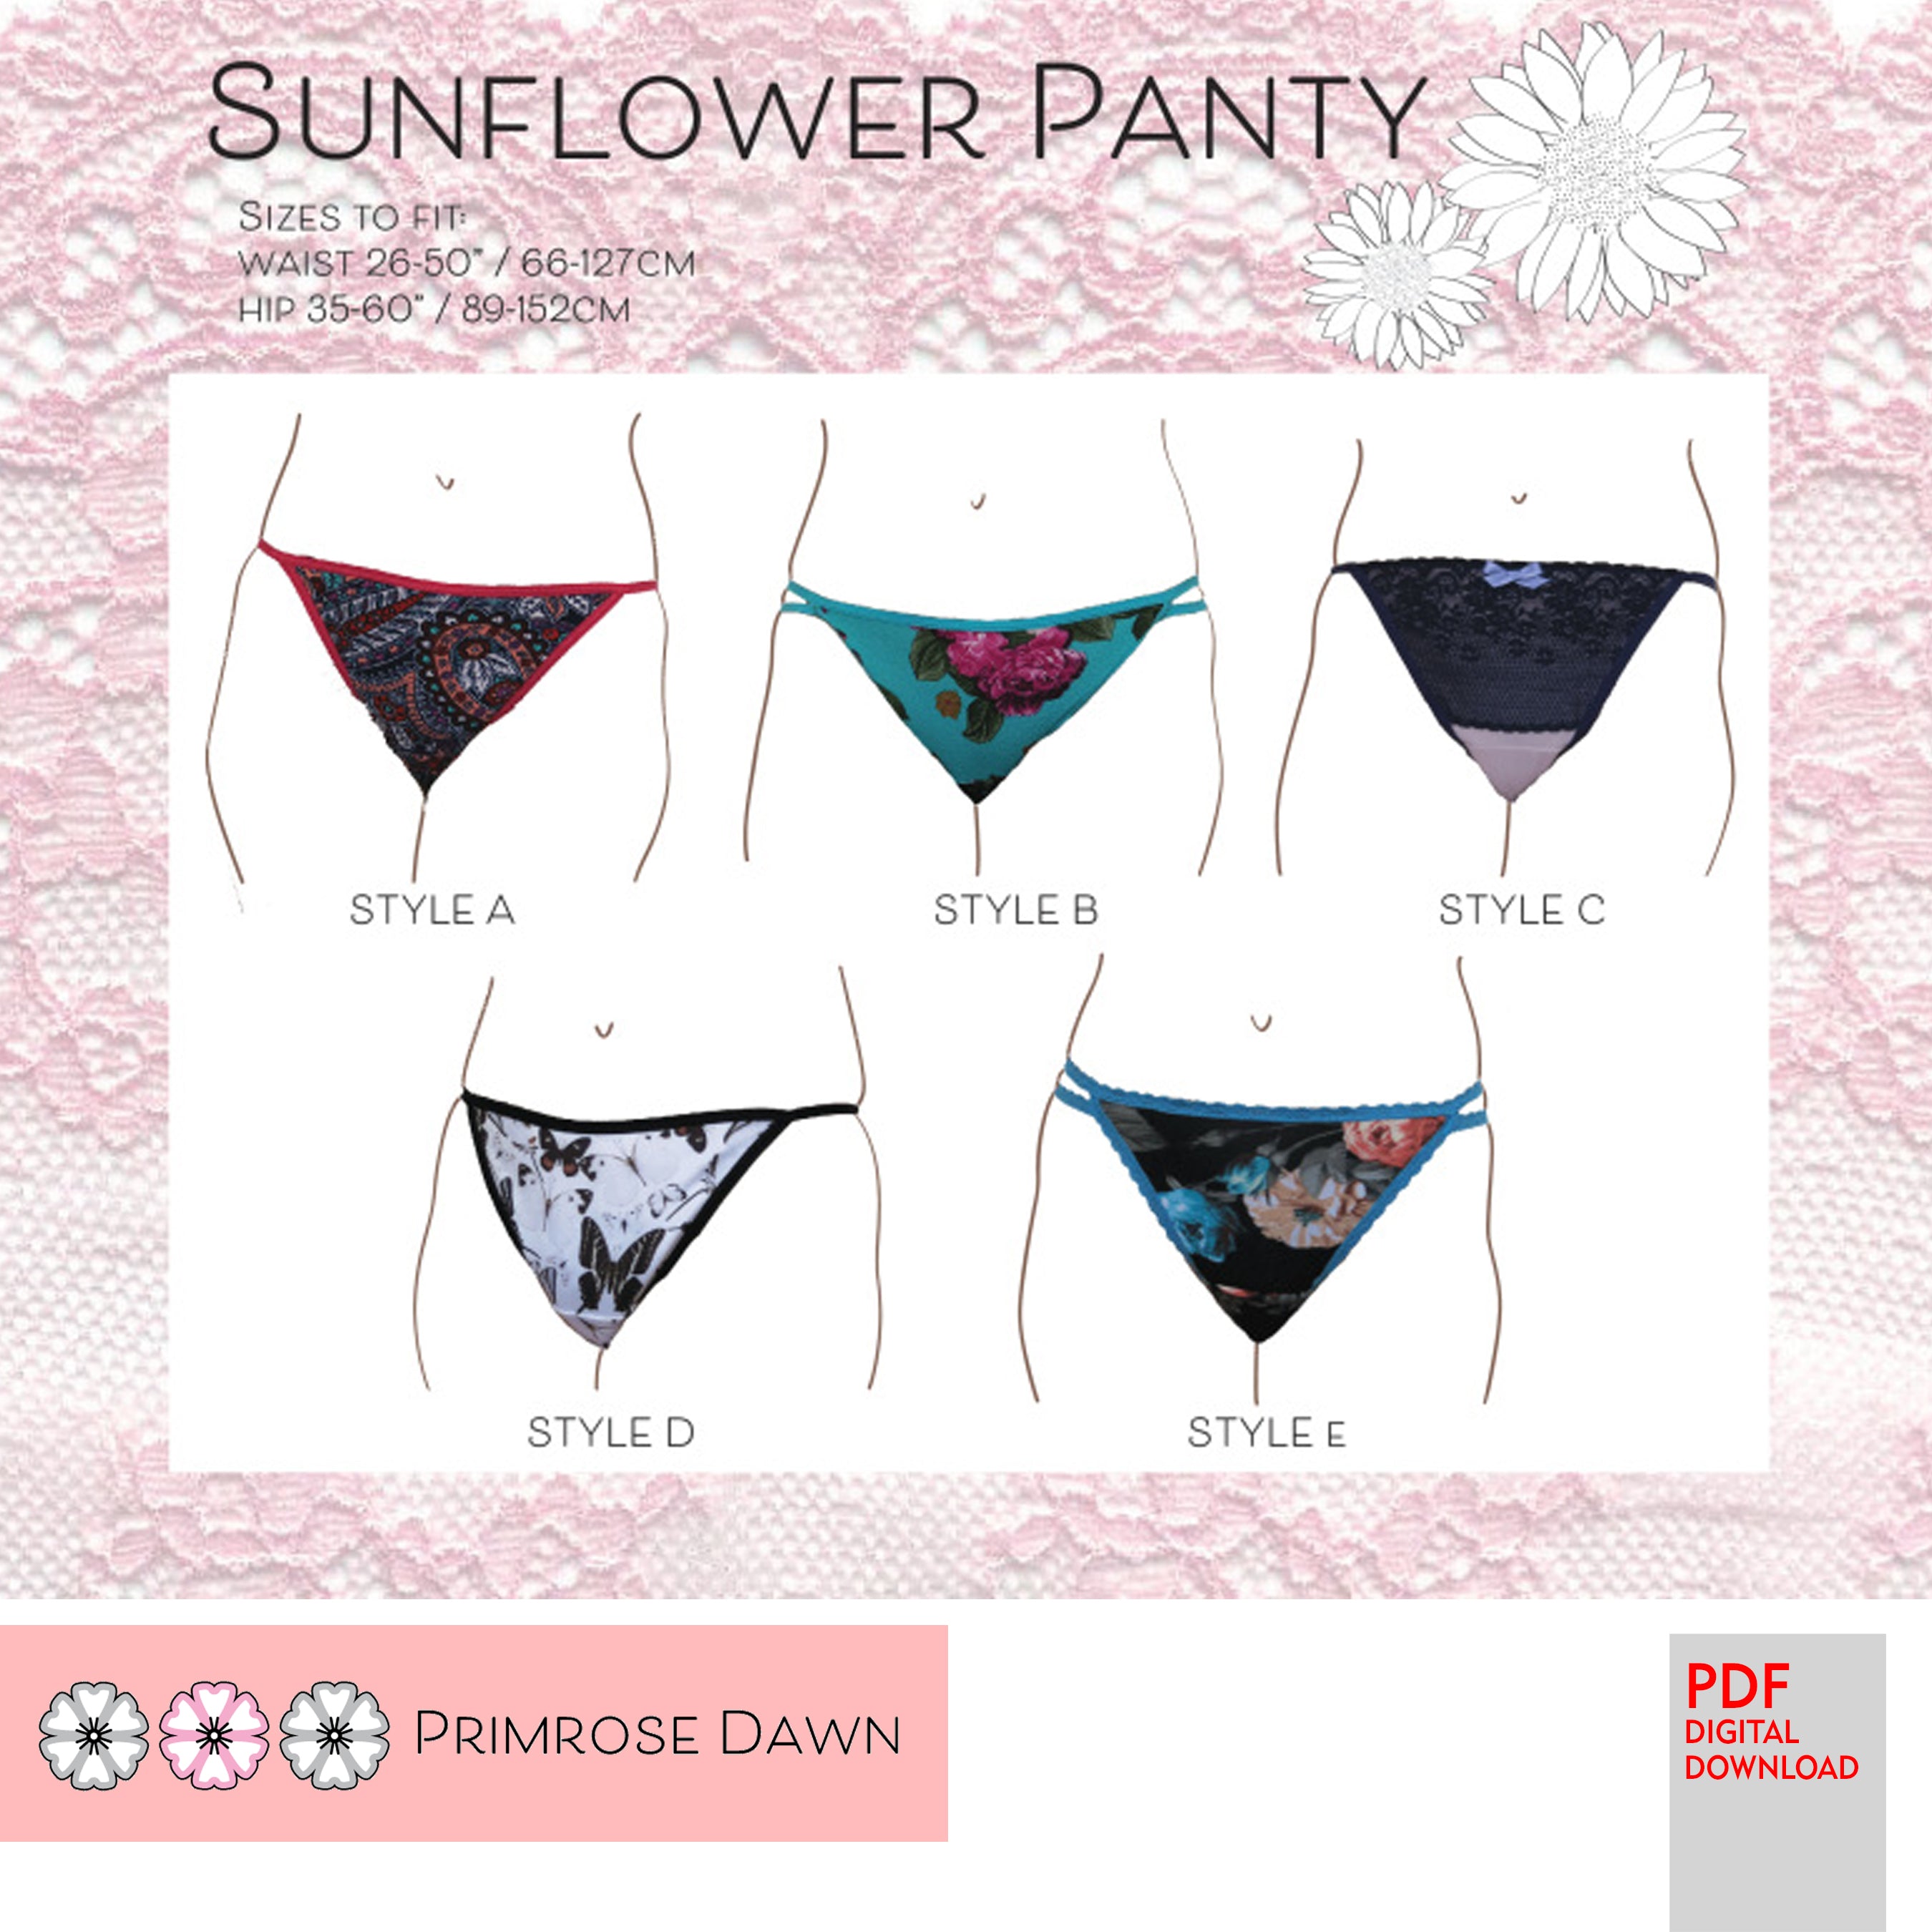 PDF Primrose Dawn Sewing Pattern- Sunflower Panty - Stitch Love Studio